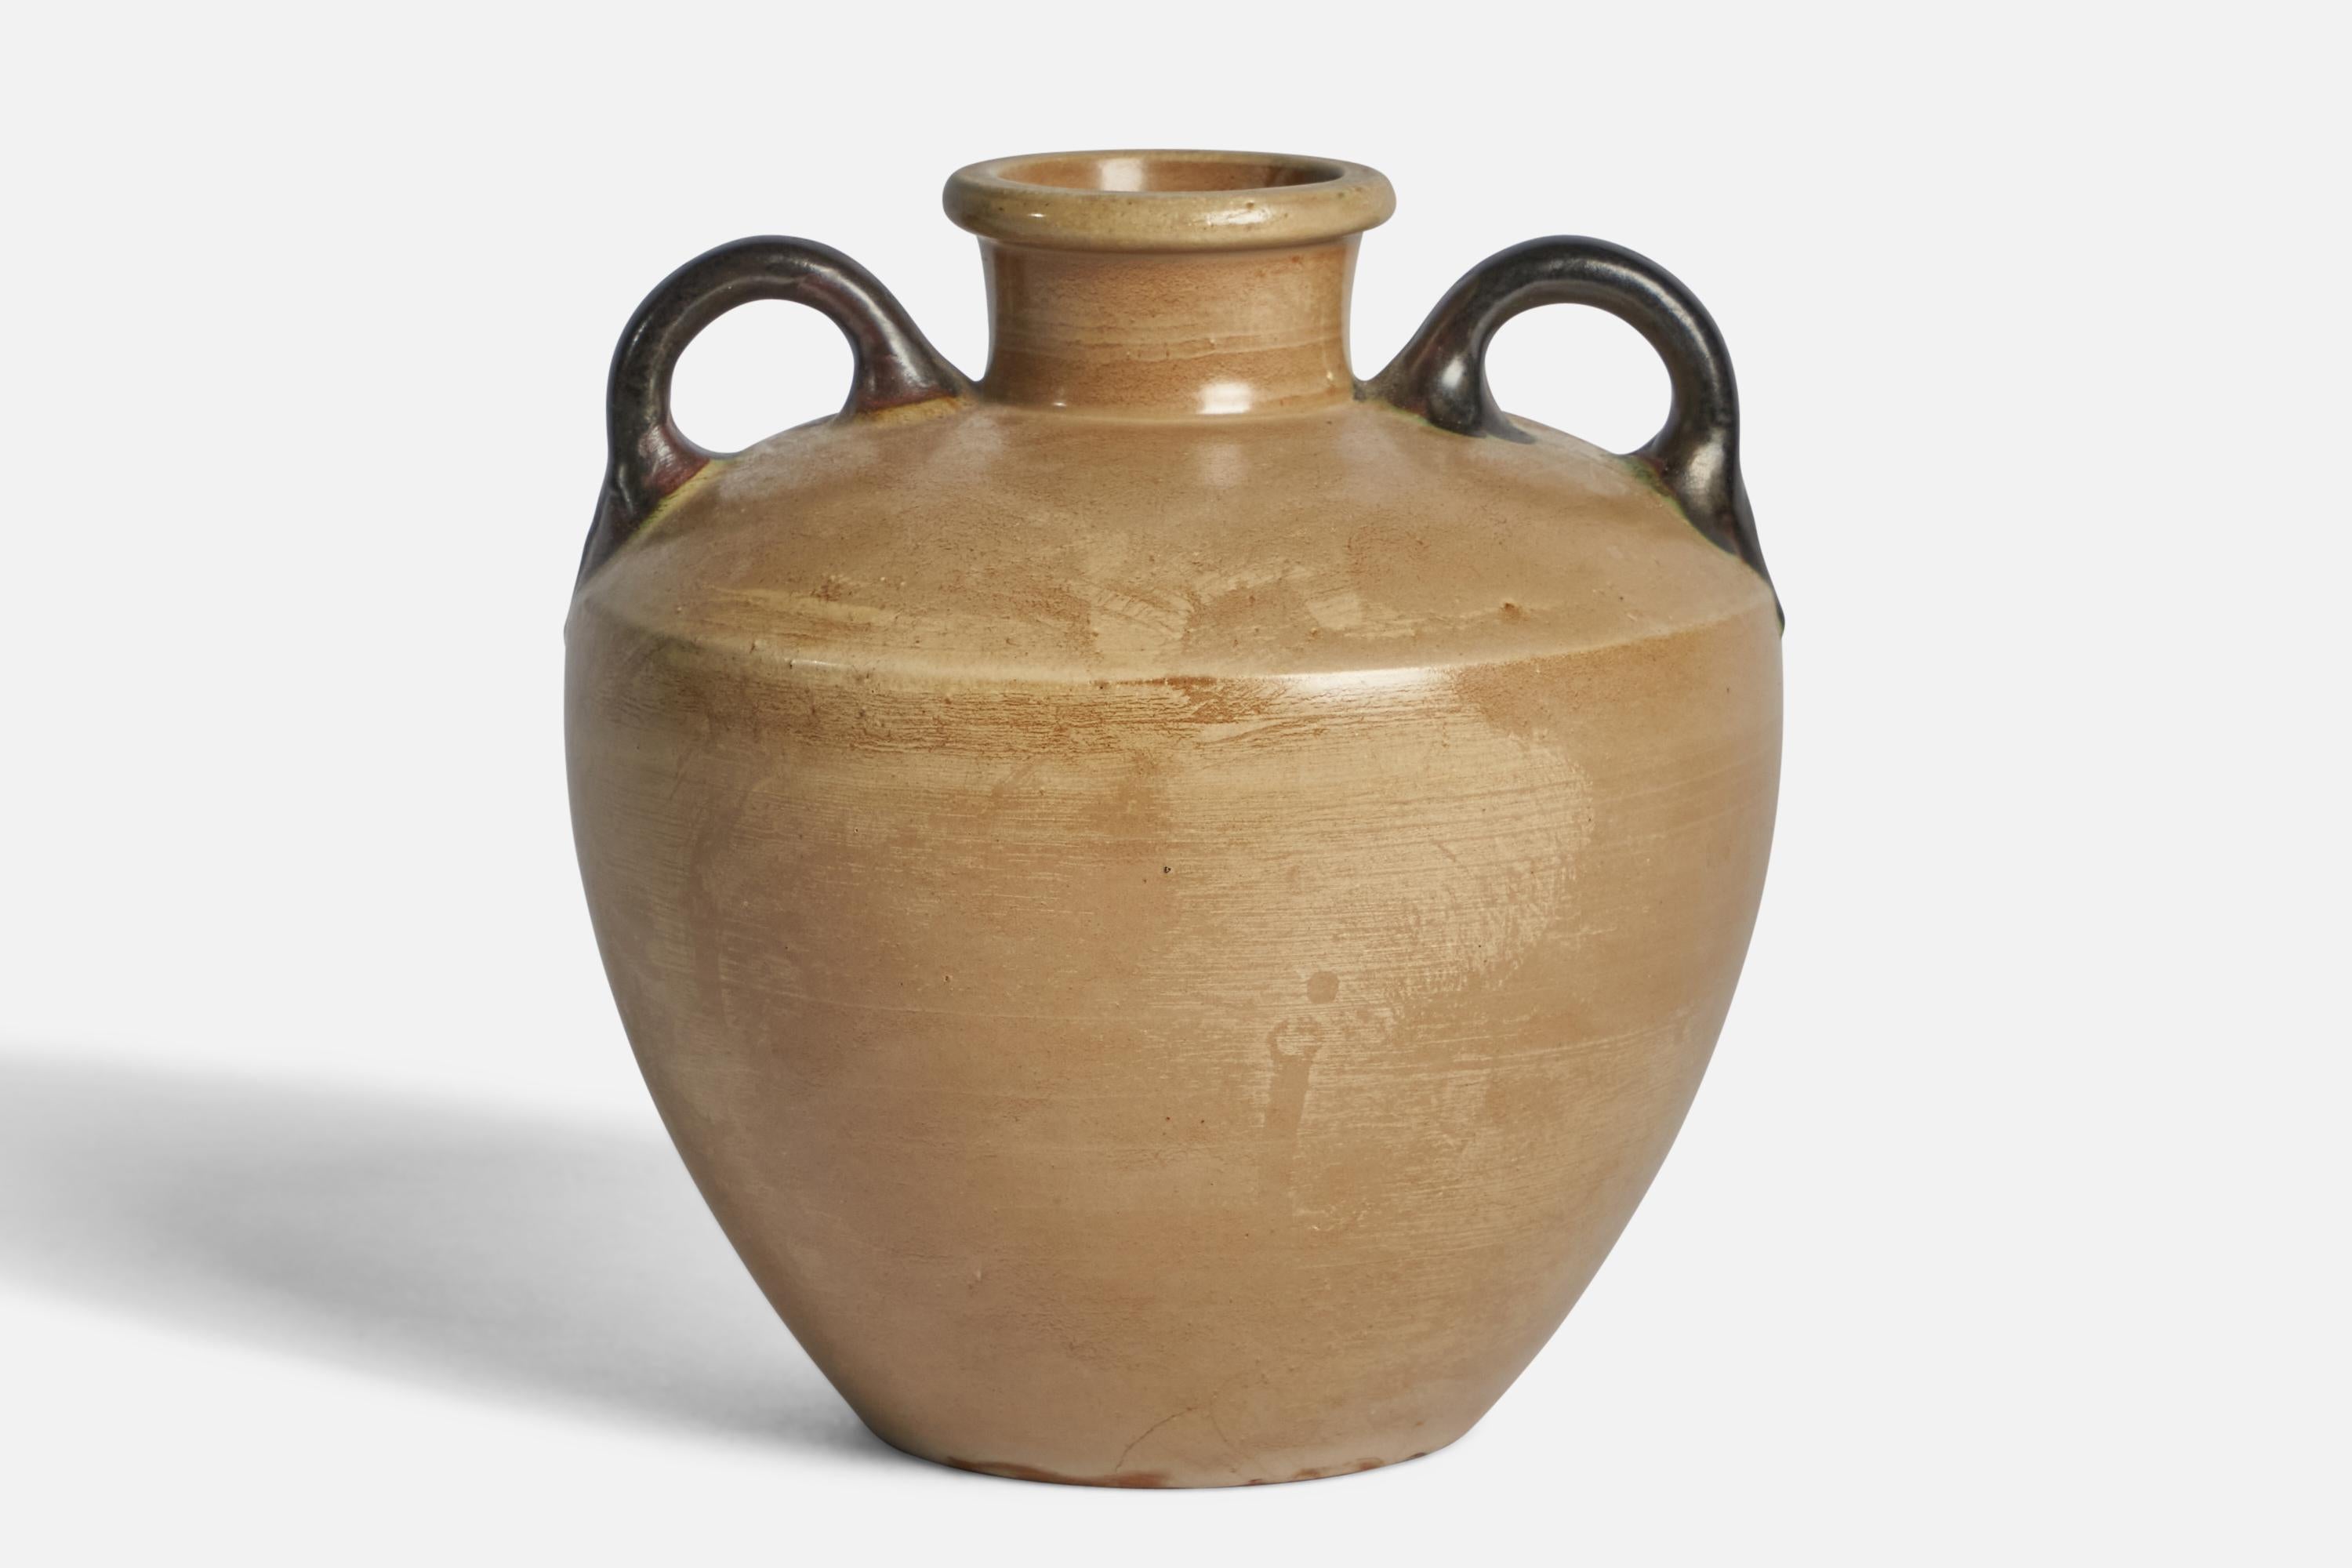 A beige and black-glazed stoneware vase designed and produced by Höganäs Keramik, Sweden, c. 1940s.